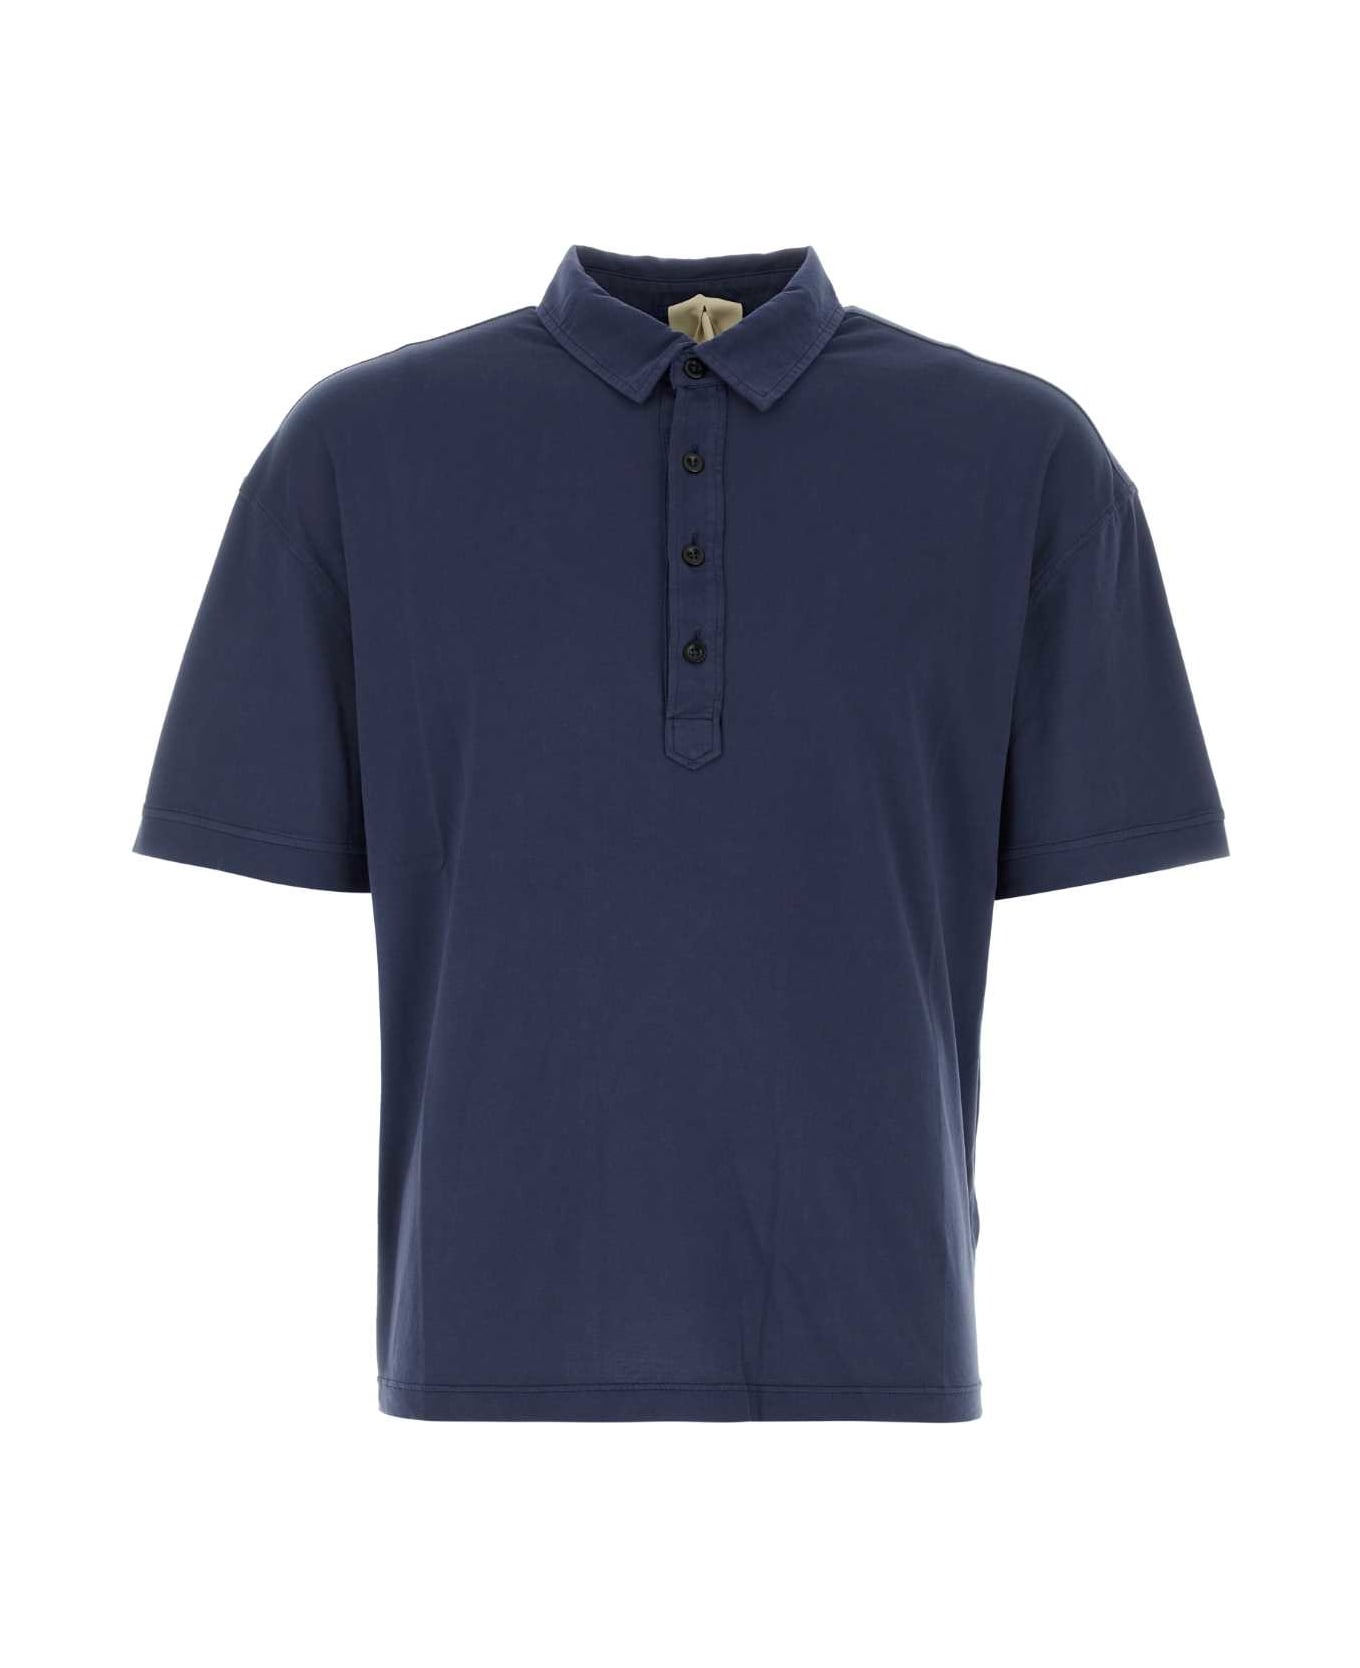 Ten C Navy Blue Cotton Polo Shirt - BLUNOTTE